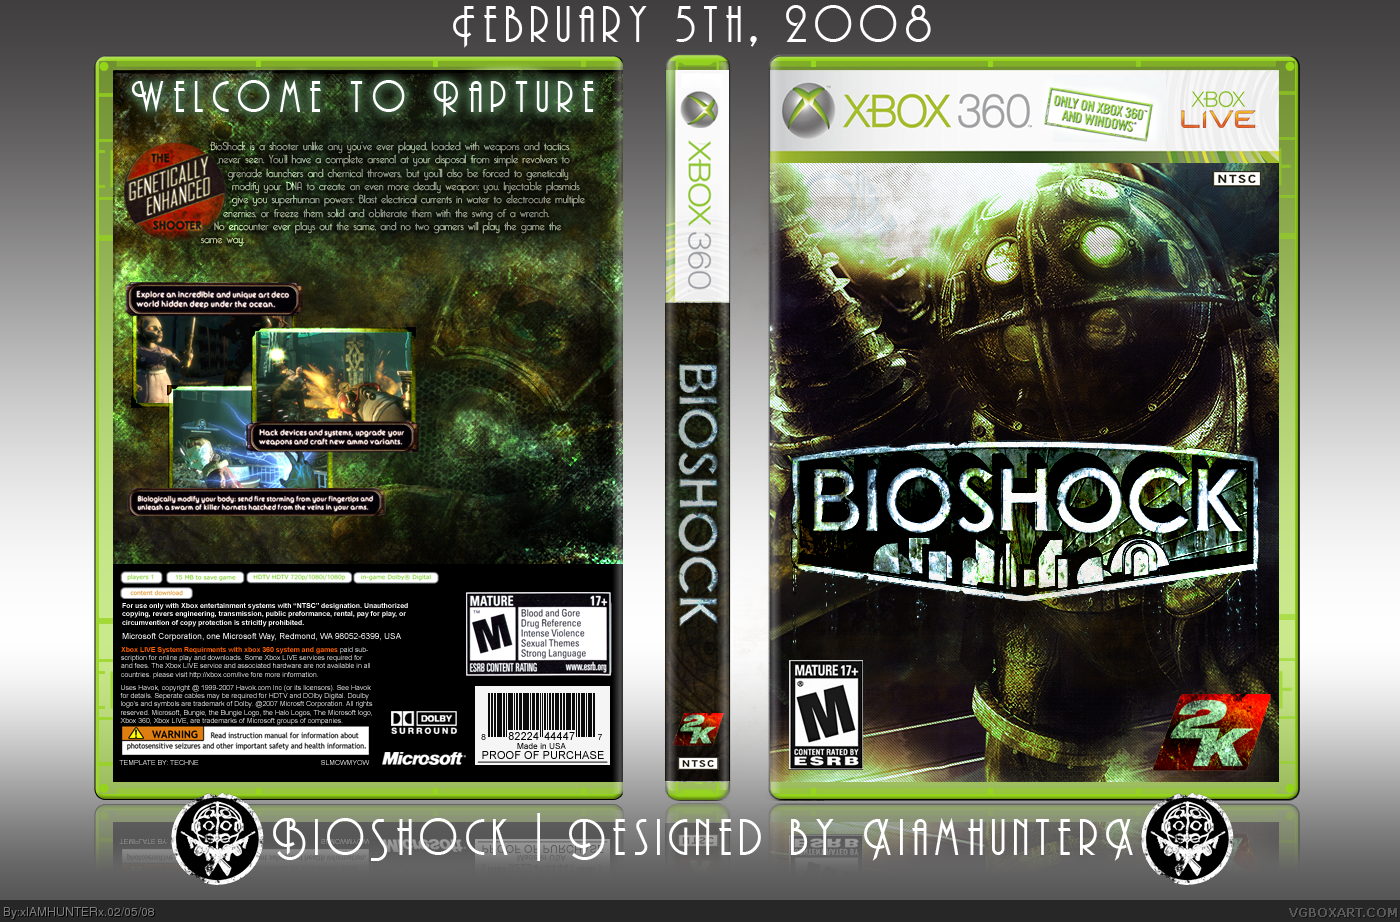 Xbox игры без интернета. Bioshock Xbox 360 обложка. Биошок 2 обложка иксбокс360. Bioshock 2 Xbox 360 обложка. Хвох 360 диск Bioshock 2.